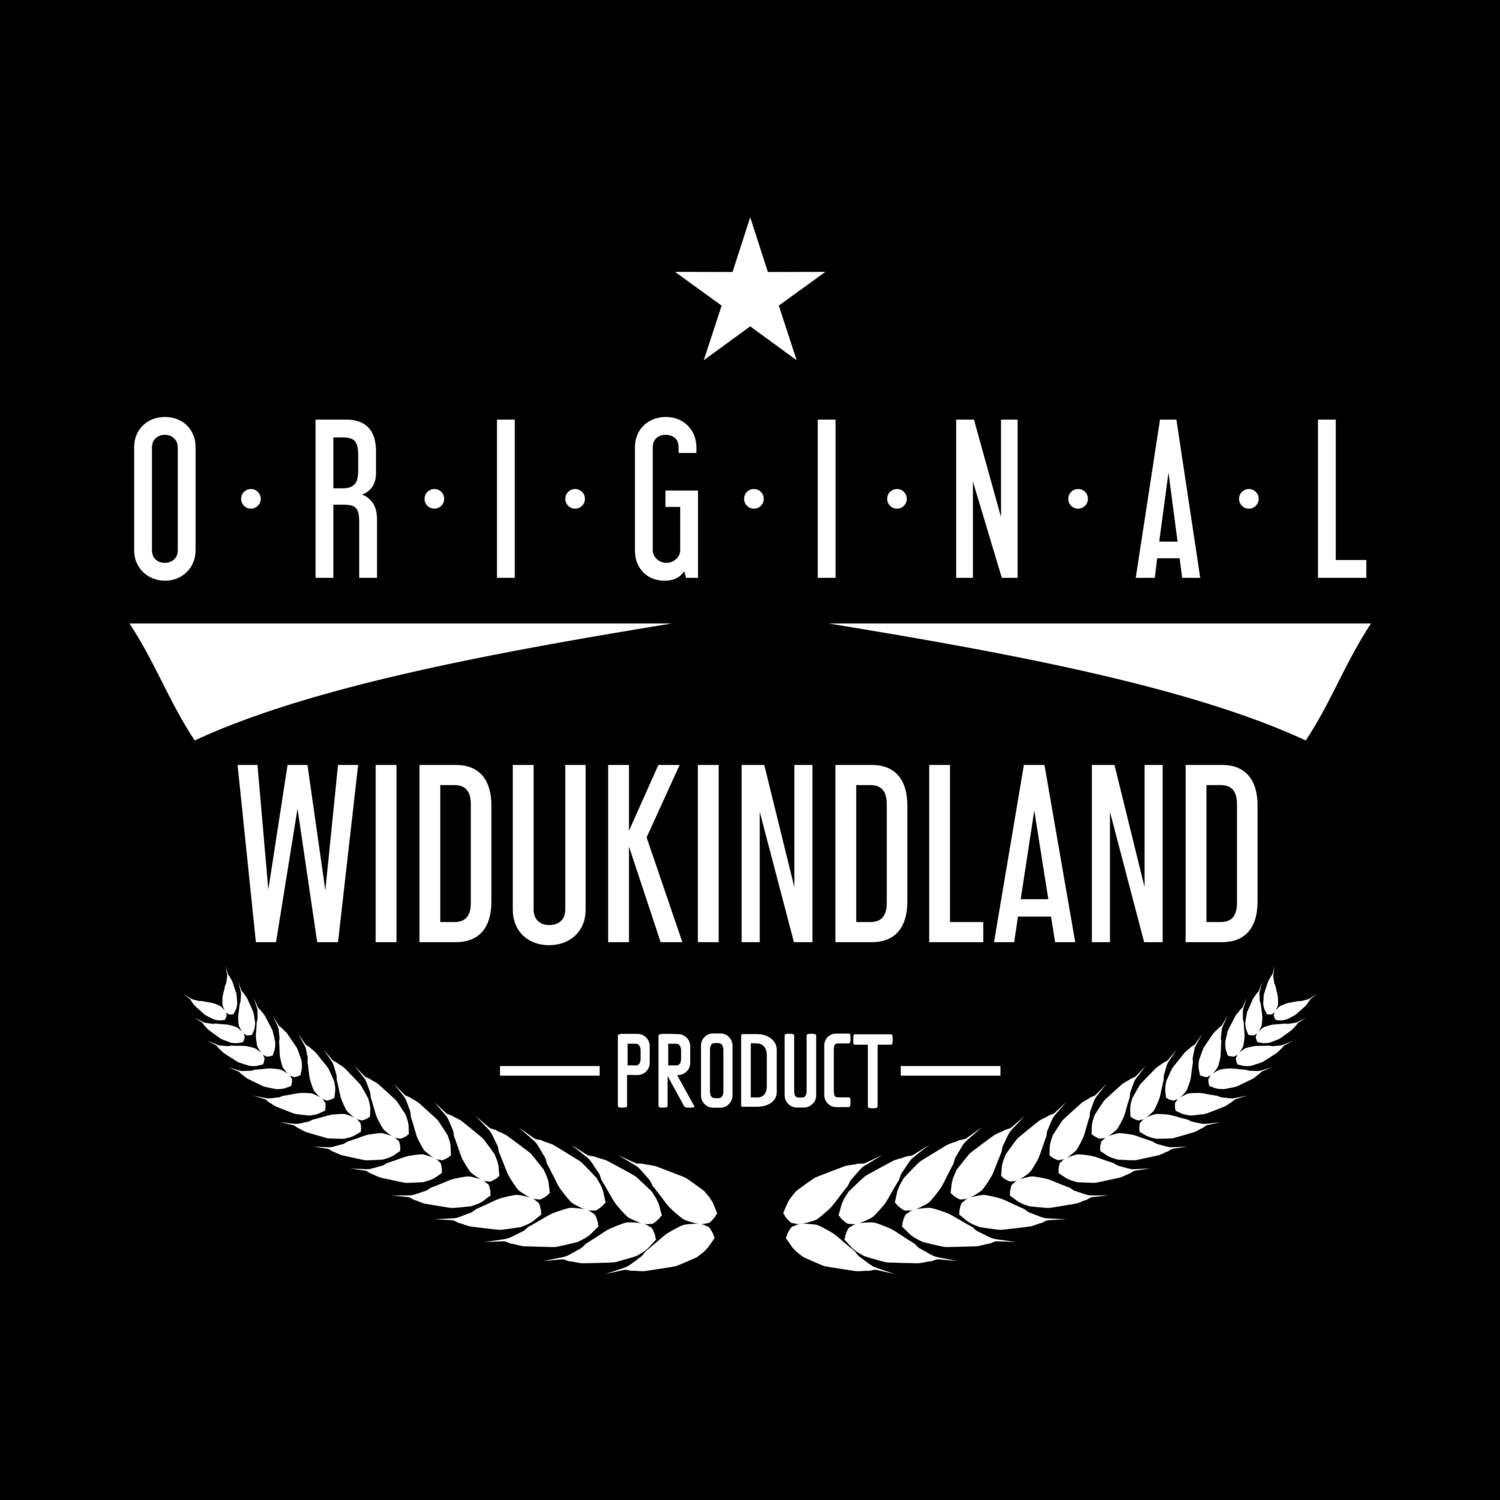 Widukindland T-Shirt »Original Product«